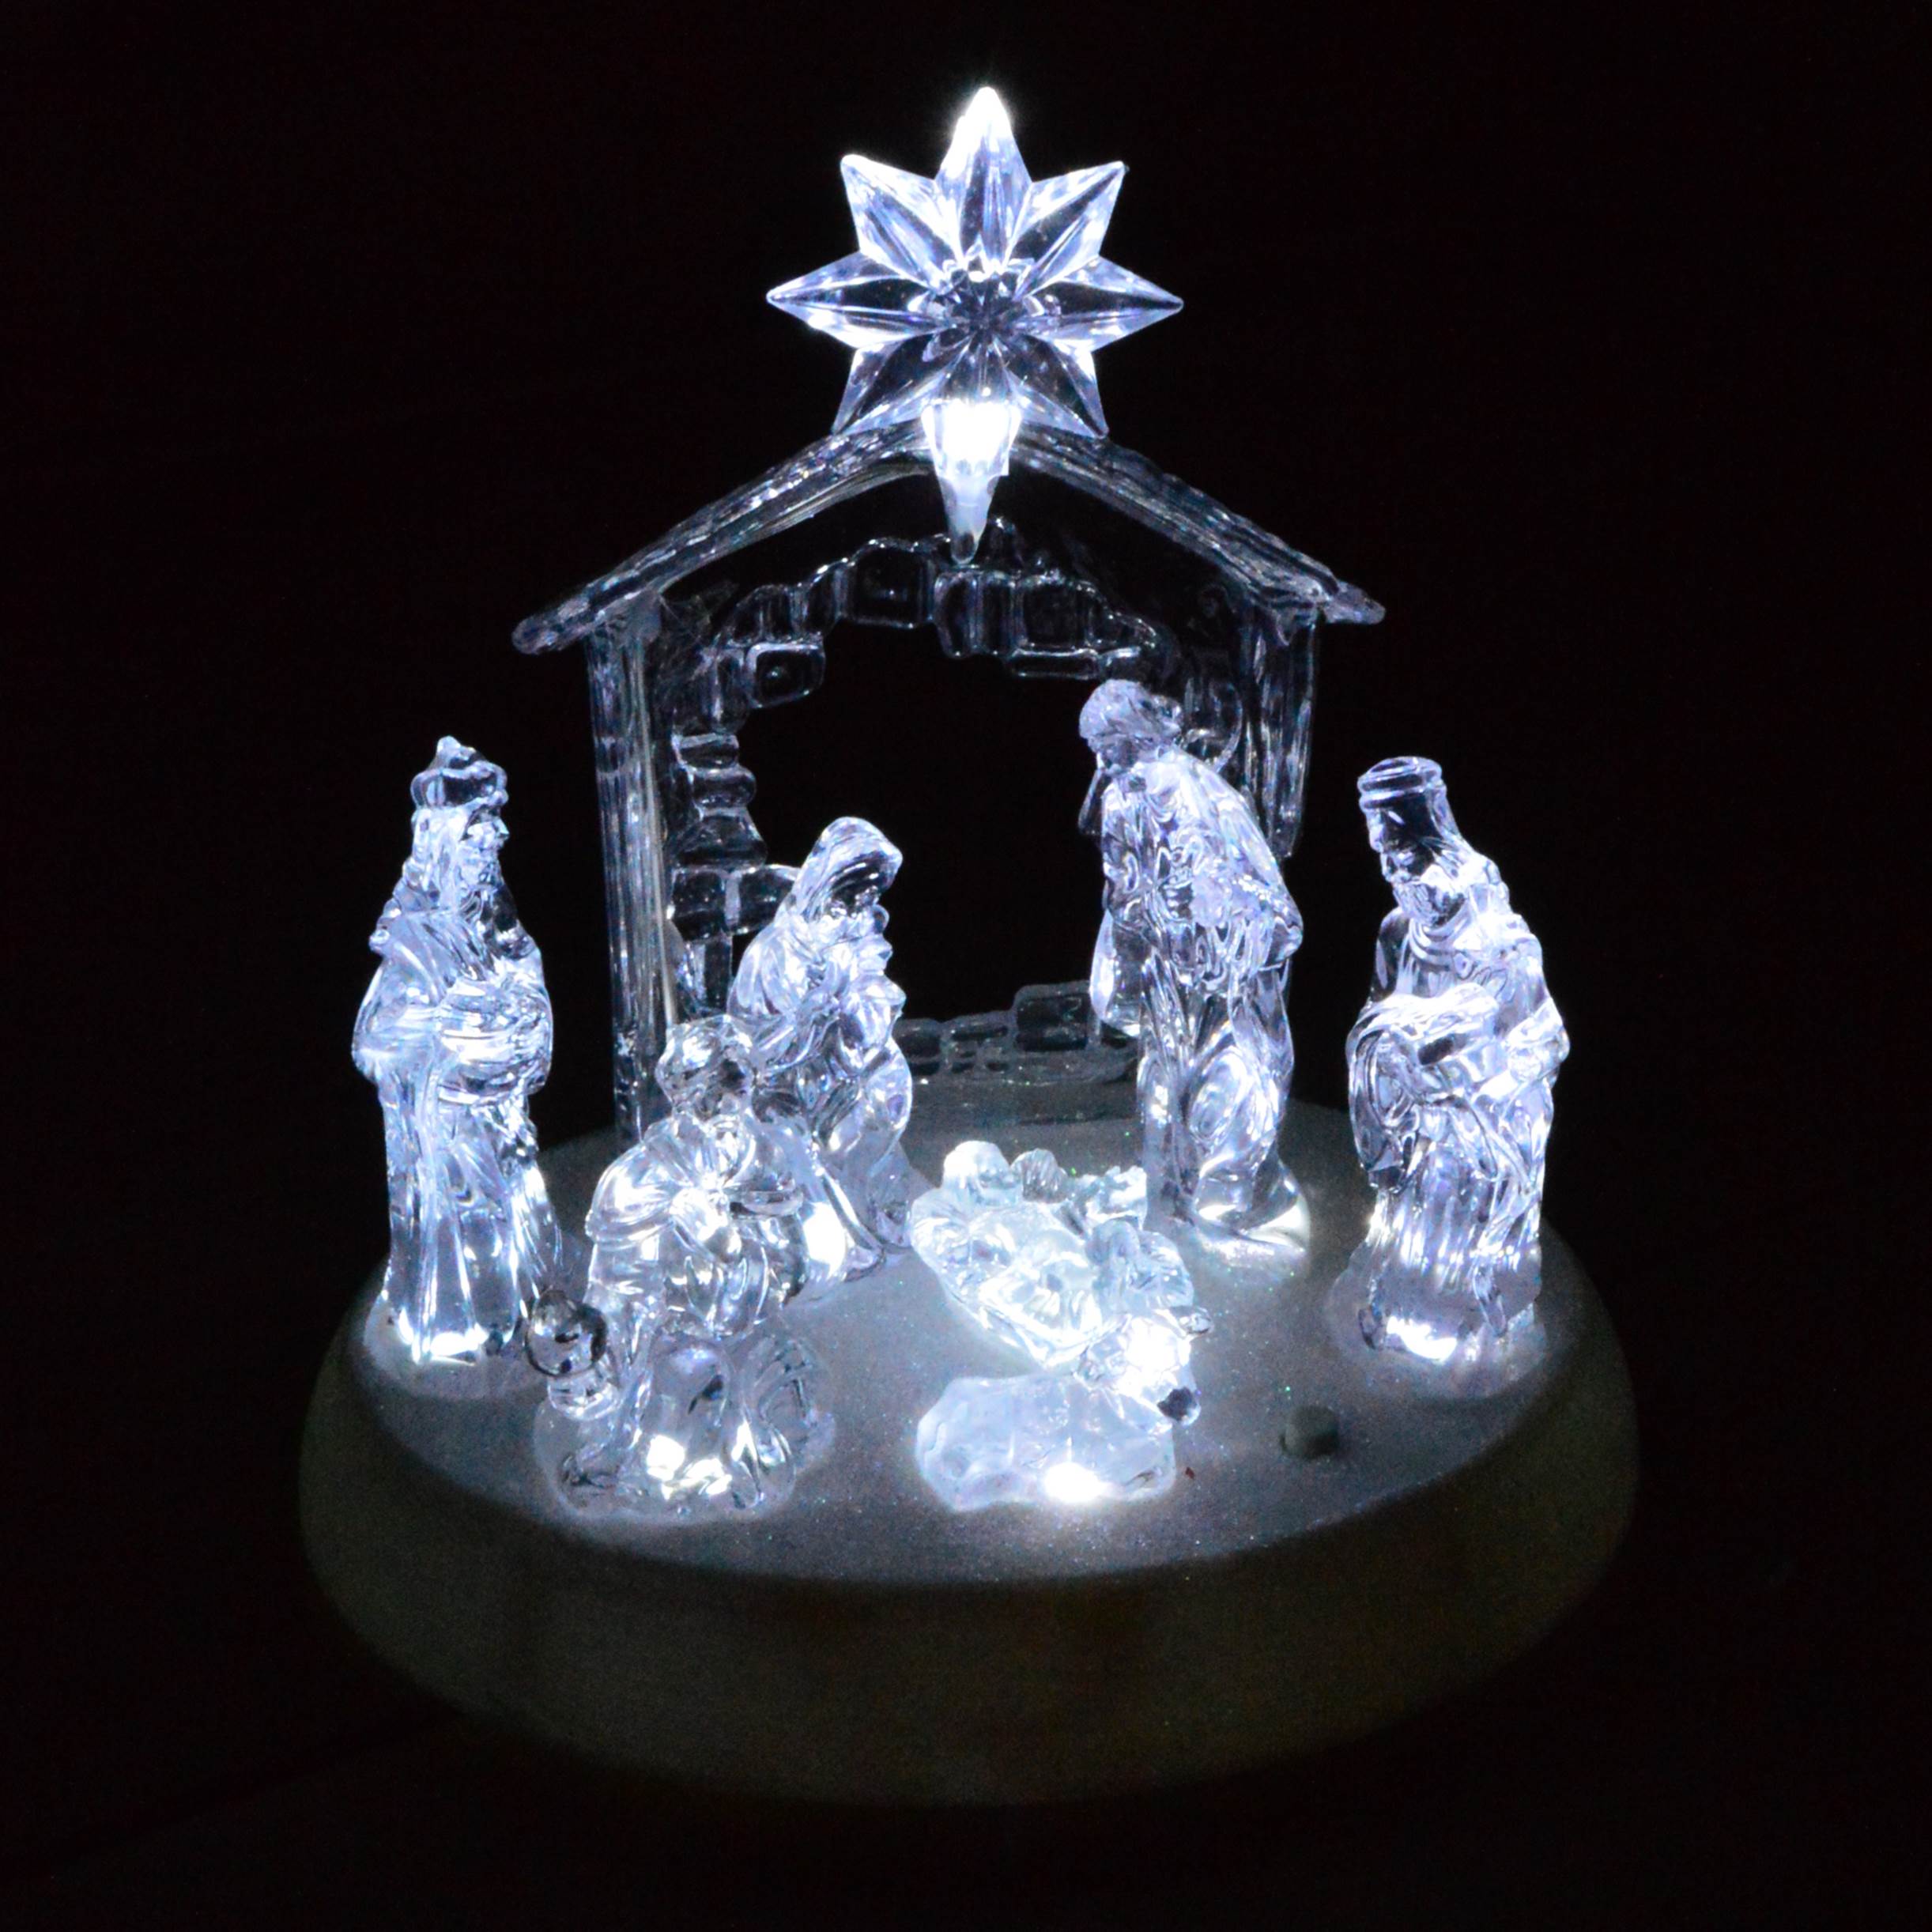 lighted nativity scene